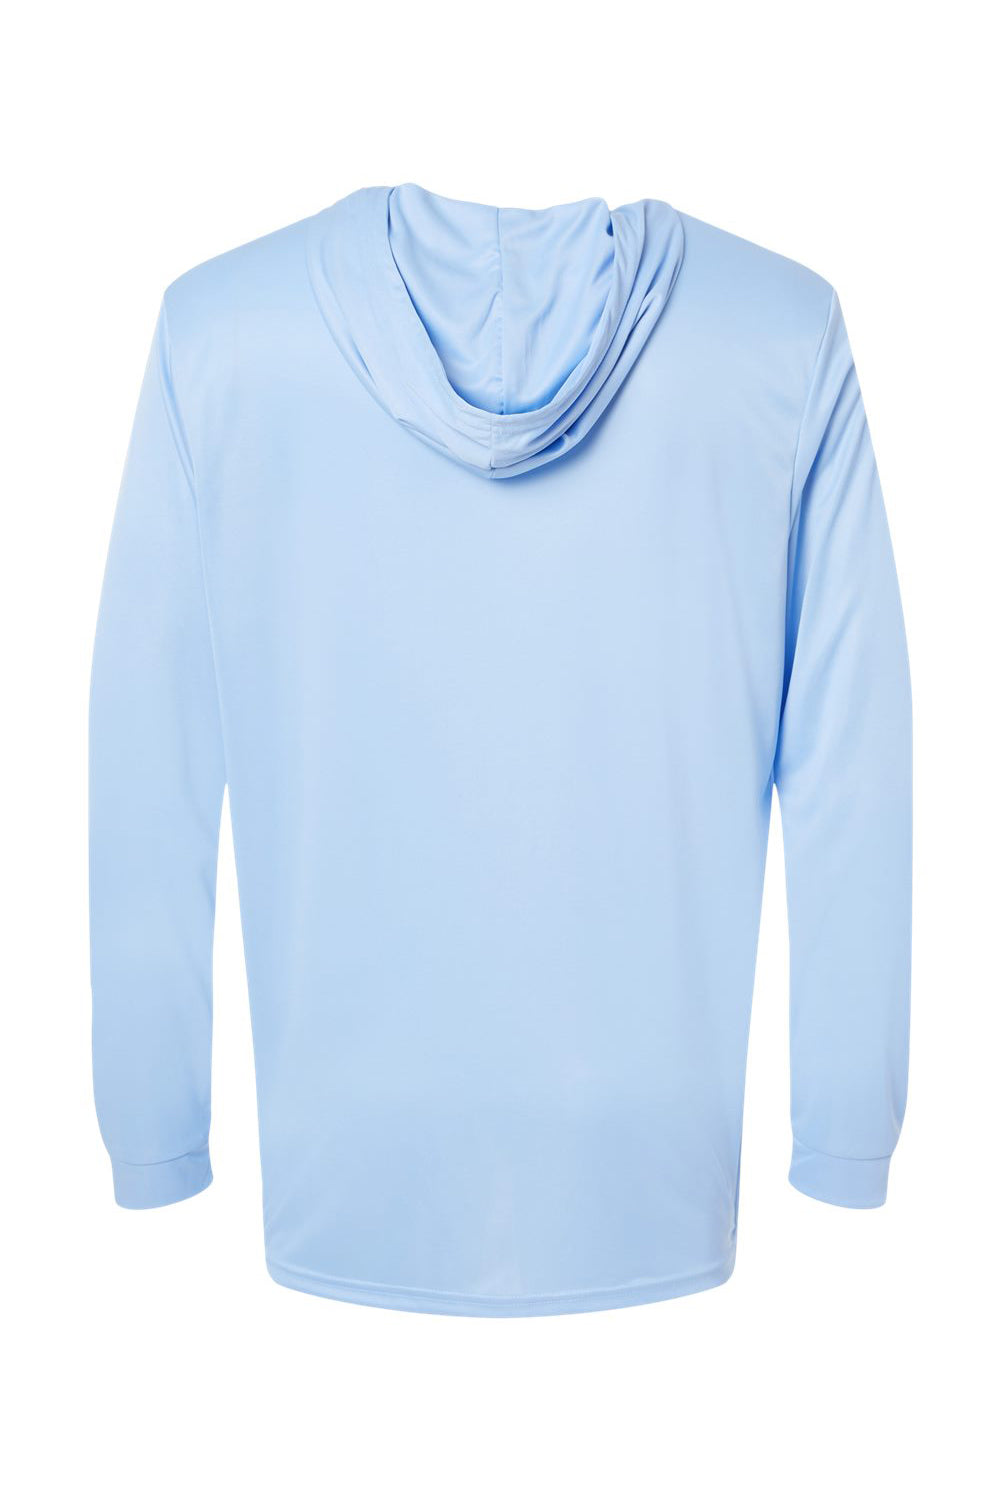 Paragon 220 Mens Bahama Performance Long Sleeve Hooded T-Shirt Hoodie Blue Mist Flat Back